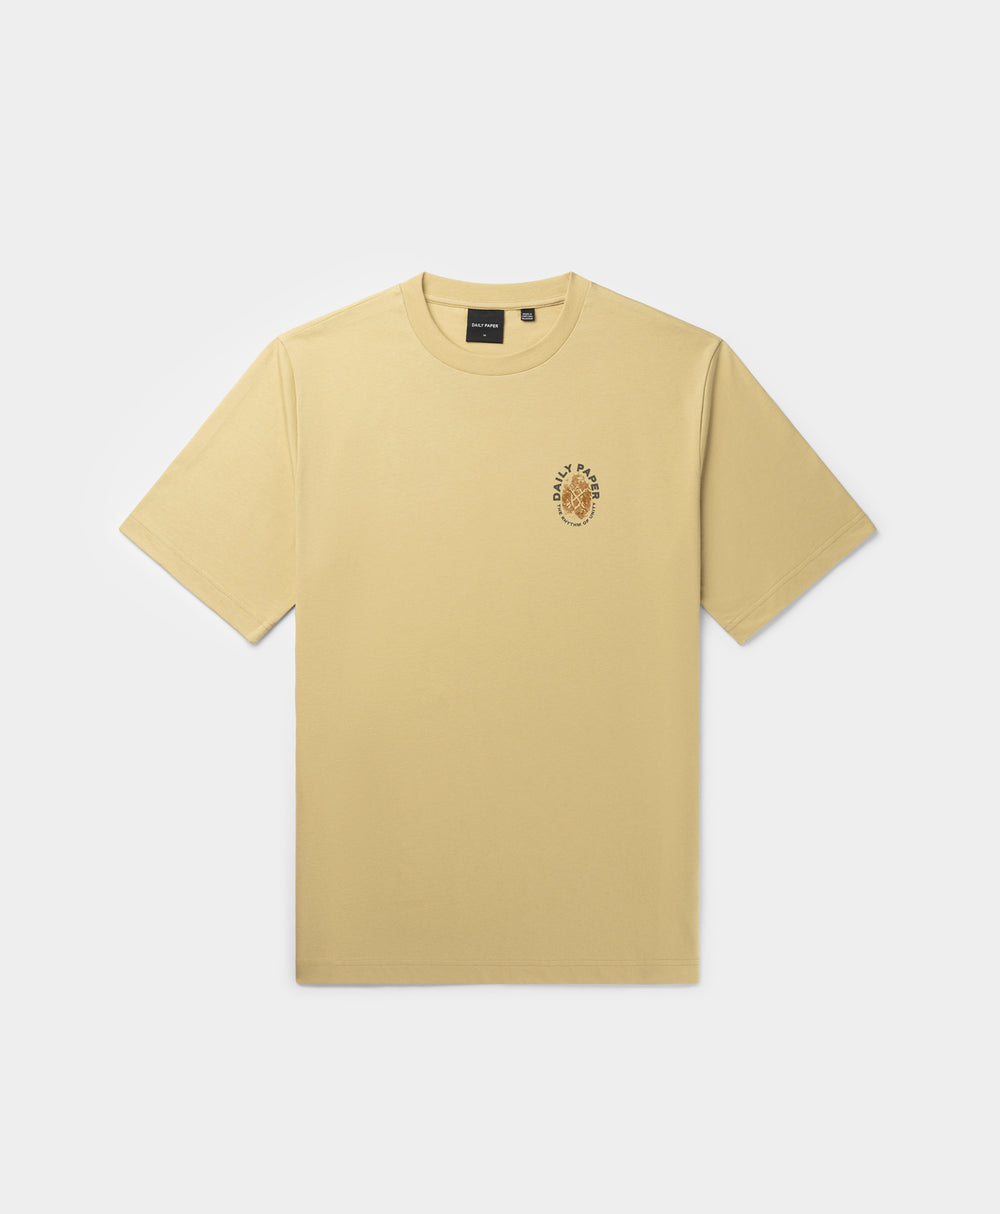 DP - Taos Beige Identity T-Shirt - Packshot - Rear